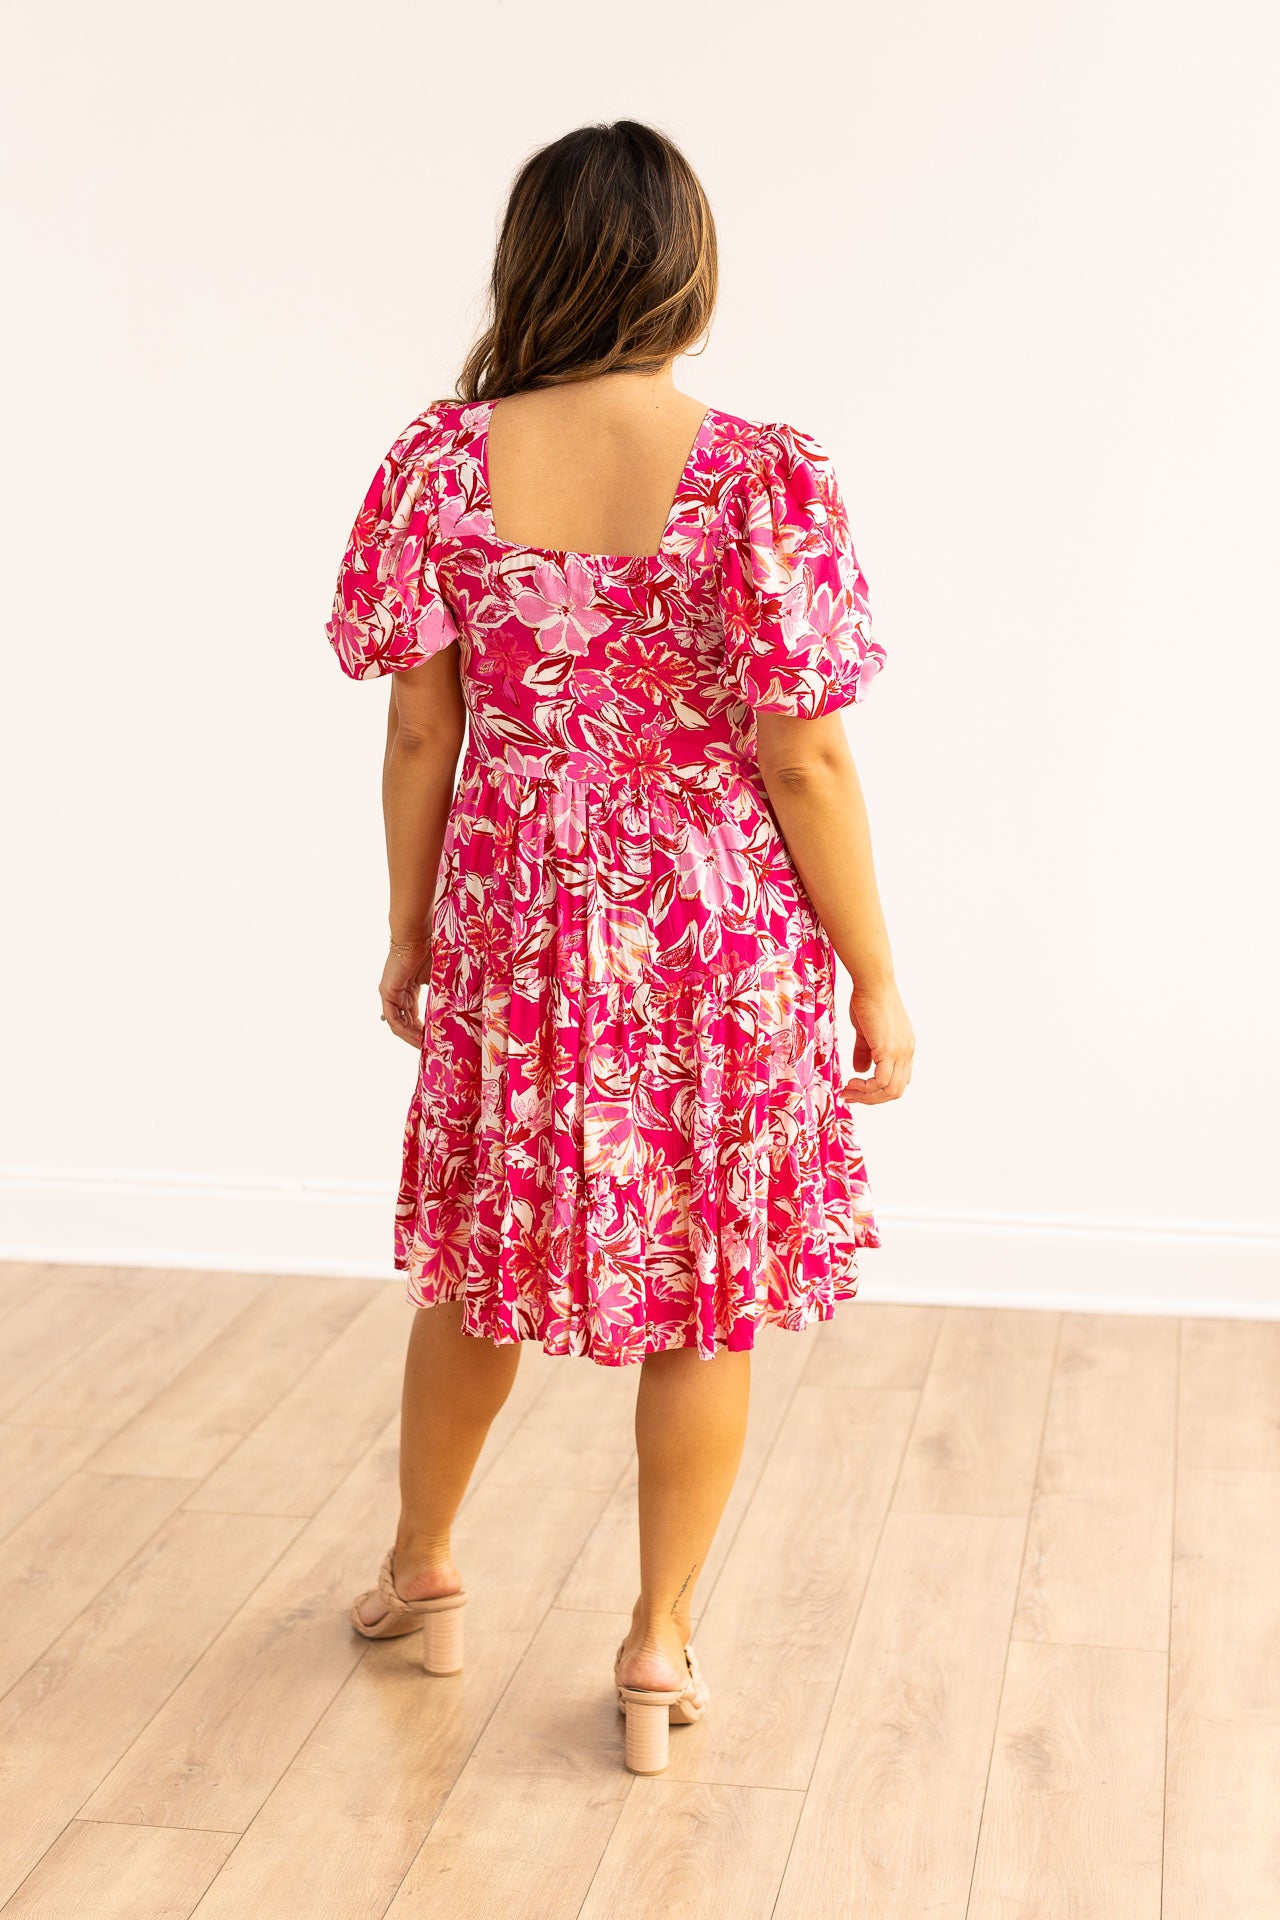 The Kaya Pink Floral Puff Sleeve Dress